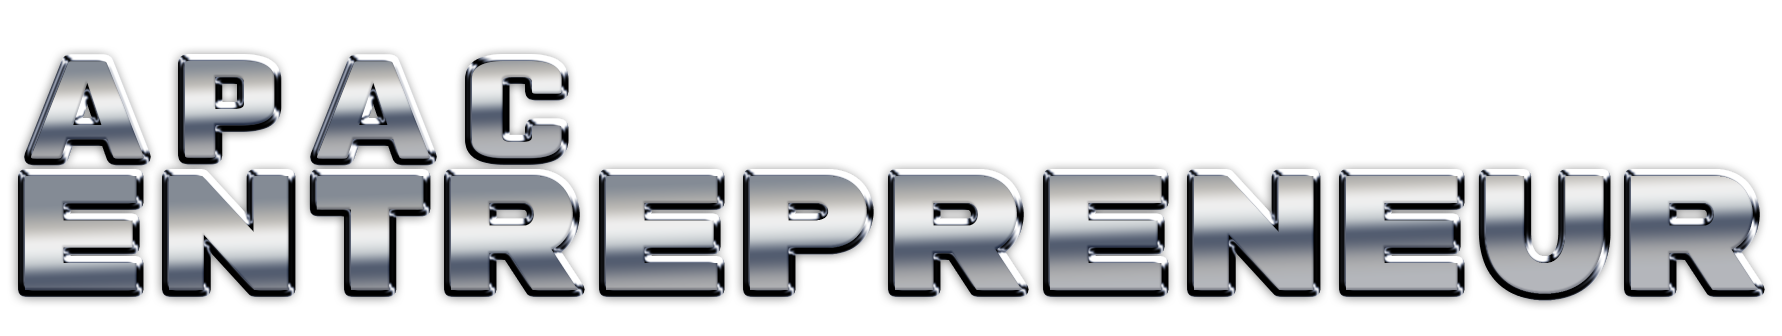 APAC ENTRE Selected Logo